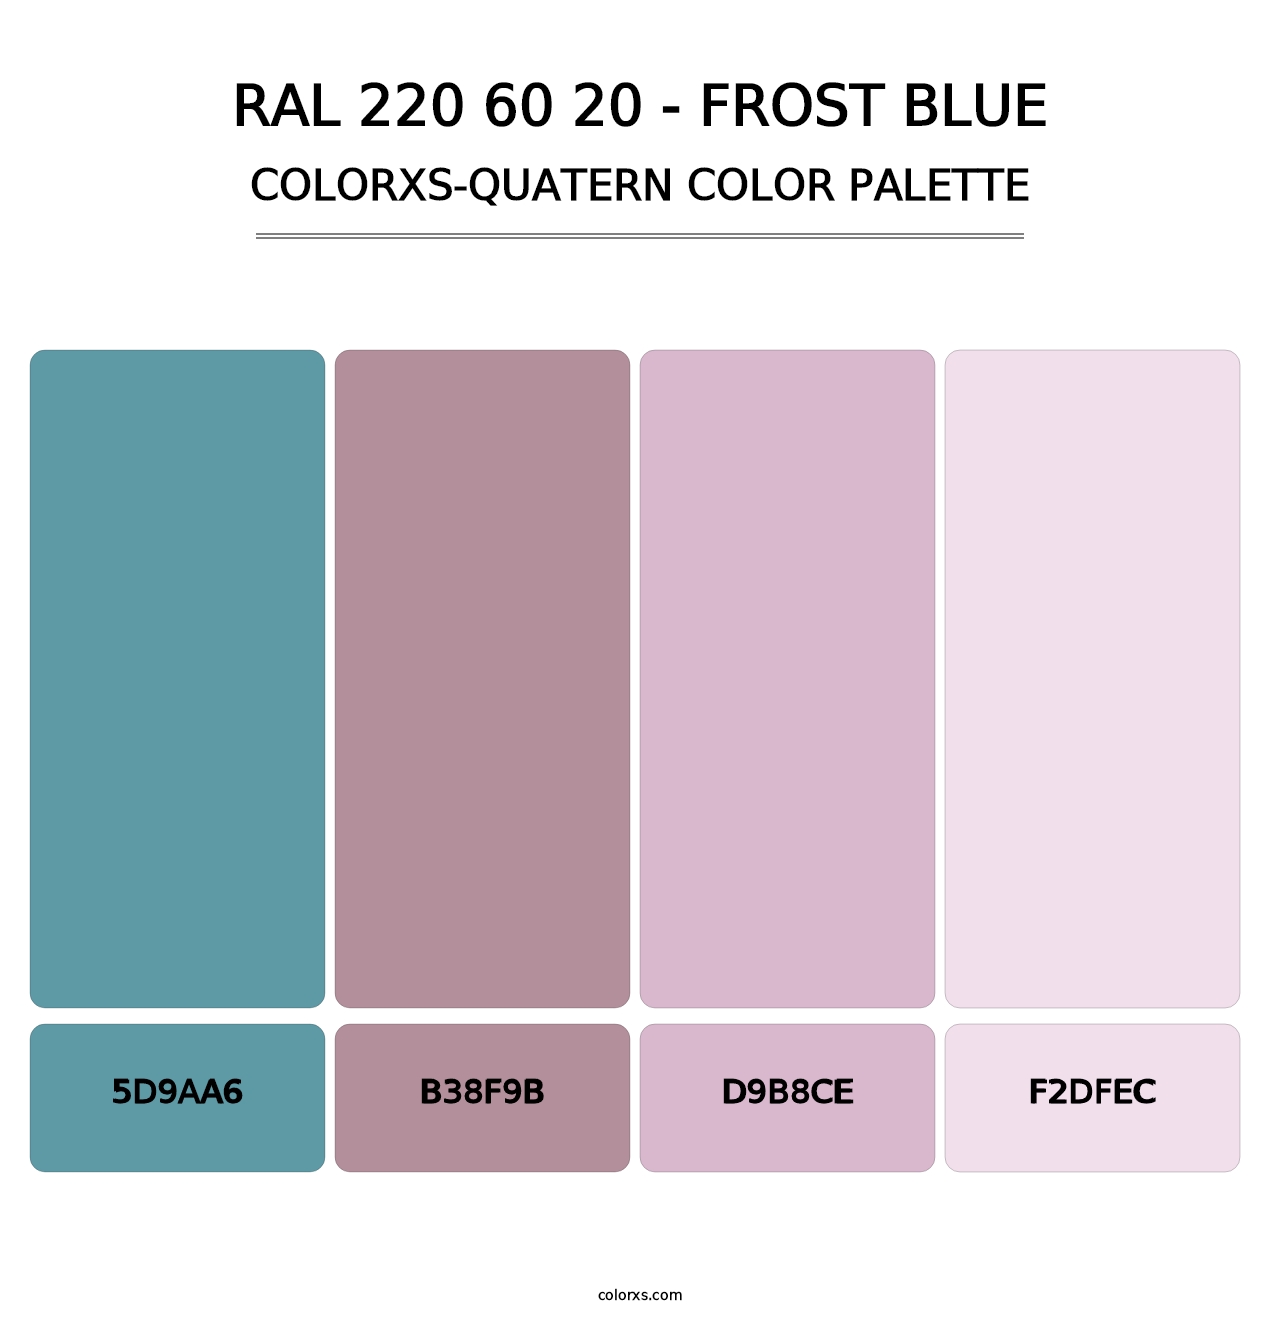 RAL 220 60 20 - Frost Blue - Colorxs Quatern Palette